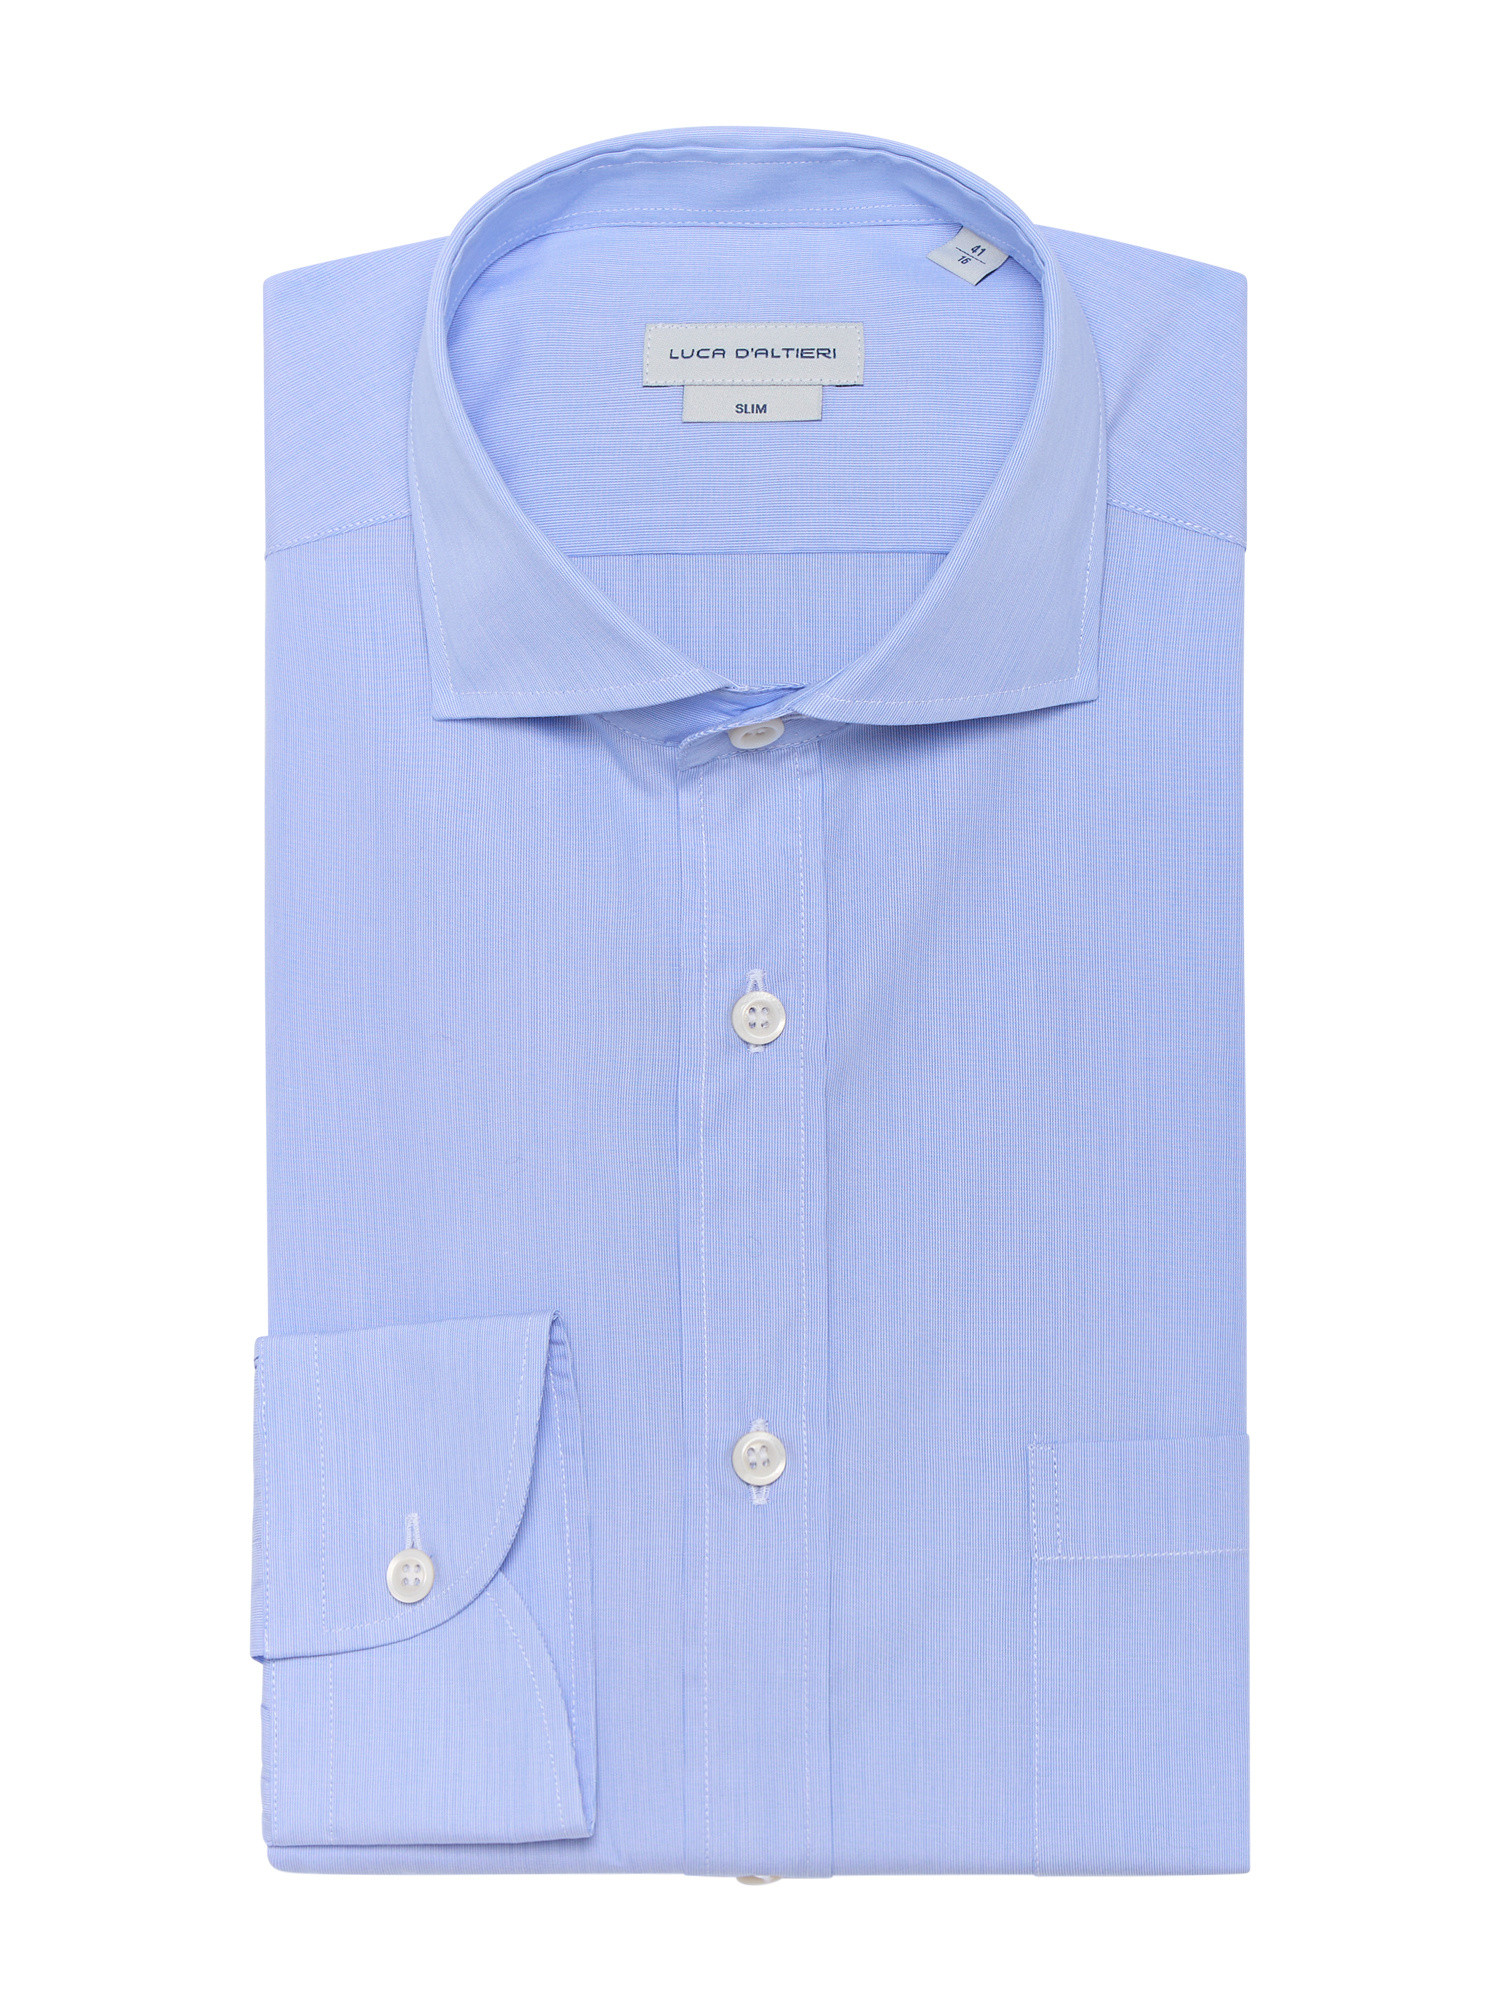 Luca D'Altieri - Casual slim fit shirt in pure cotton poplin, Light Blue, large image number 0